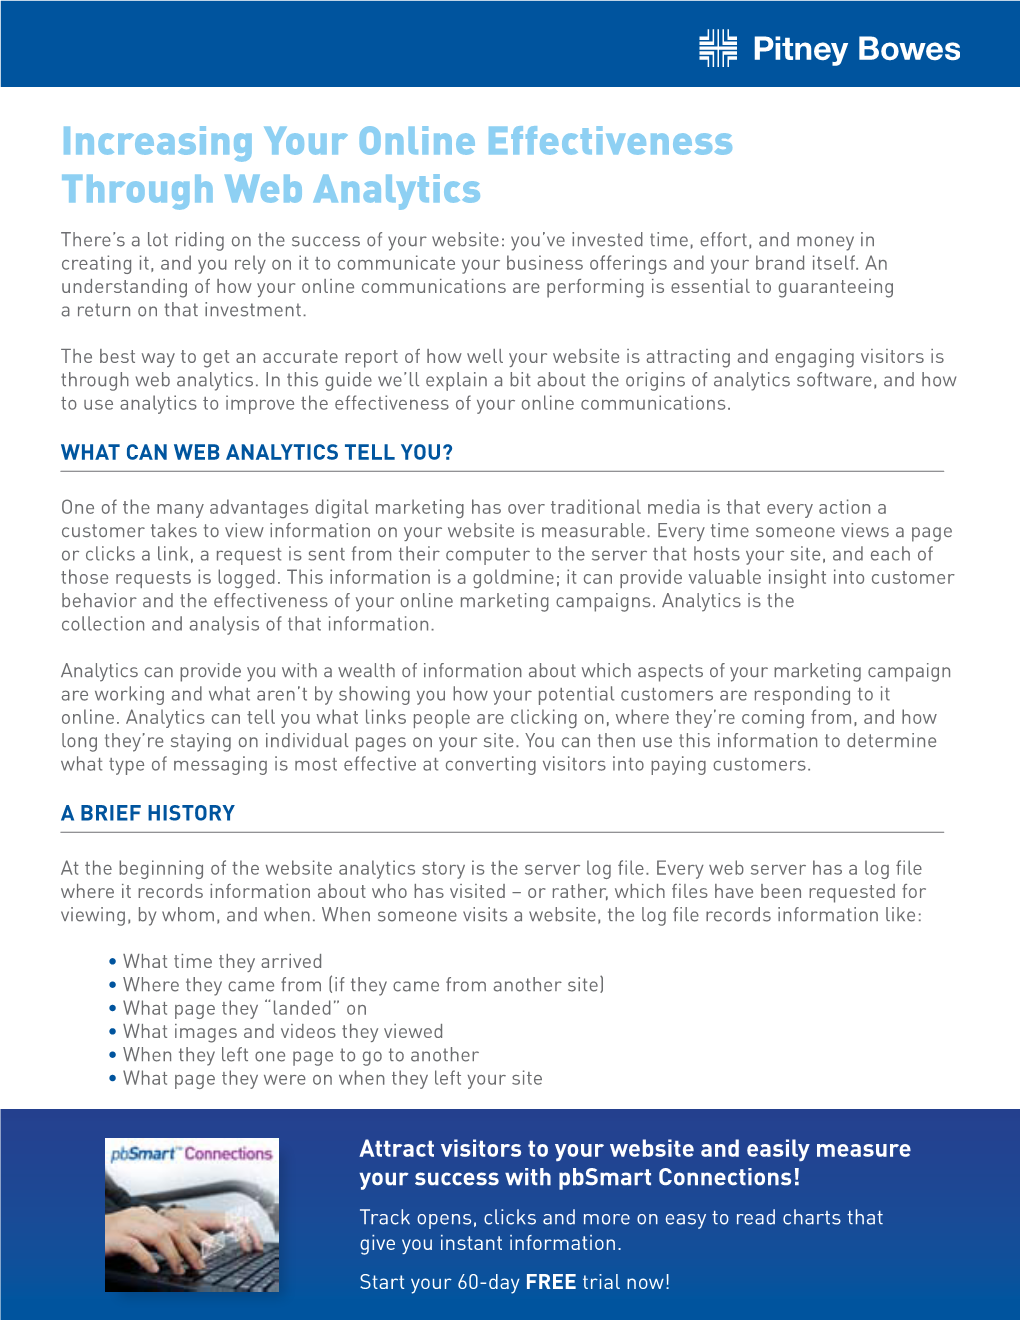 Increasing Your Online Effectiveness Through Web Analytics